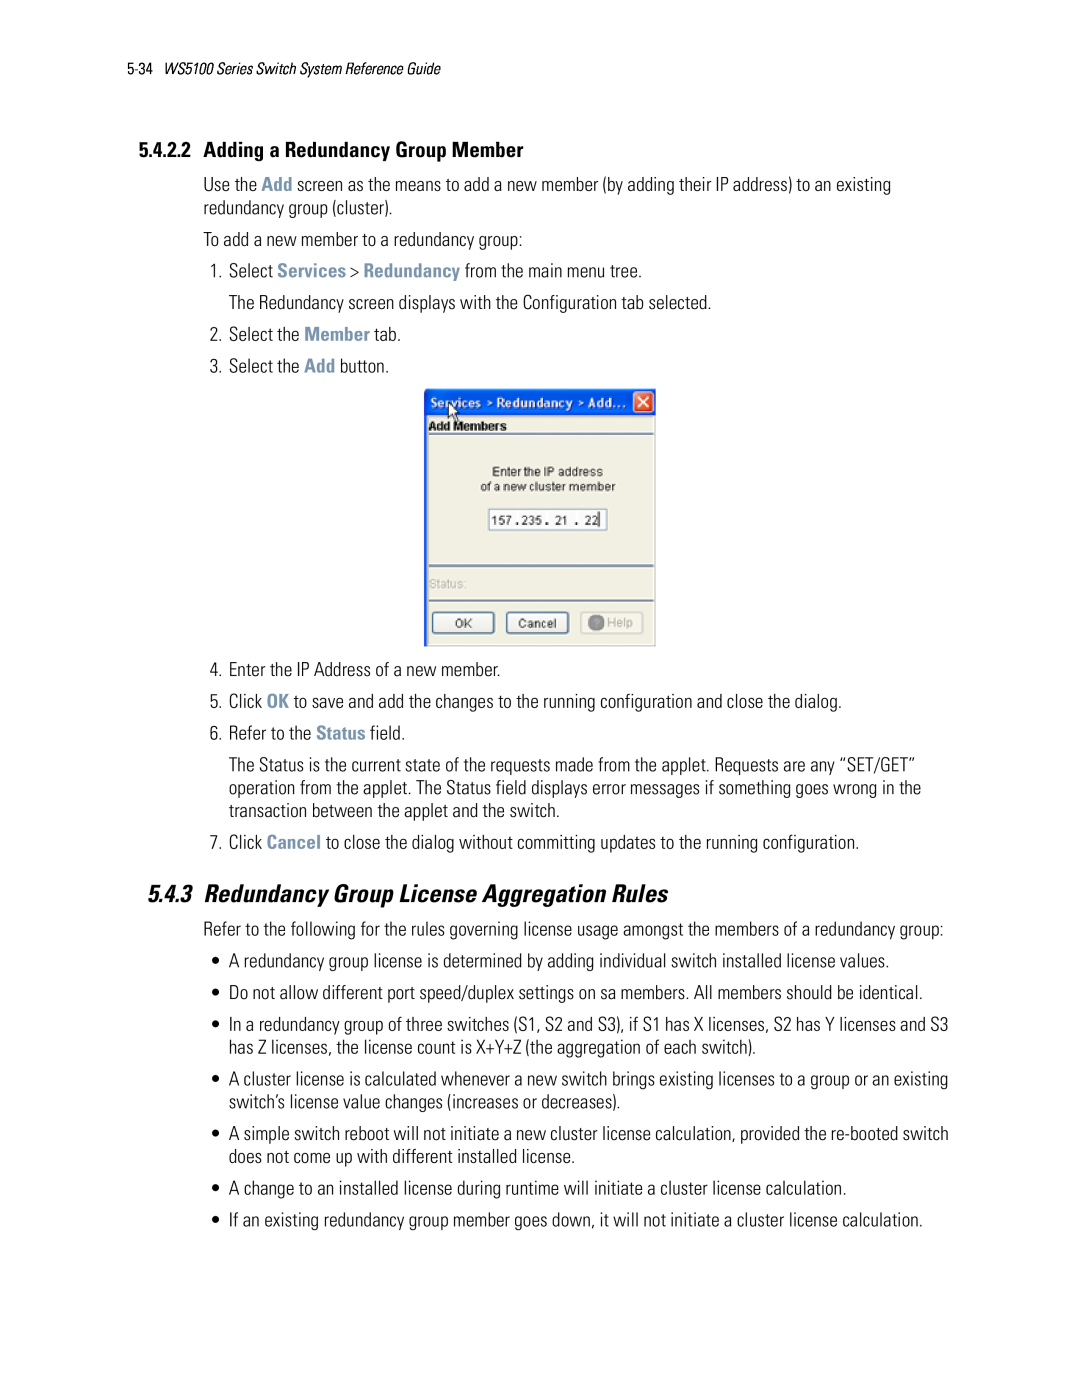 Motorola WS5100 manual 5.4.3Redundancy Group License Aggregation Rules, 5.4.2.2Adding a Redundancy Group Member 